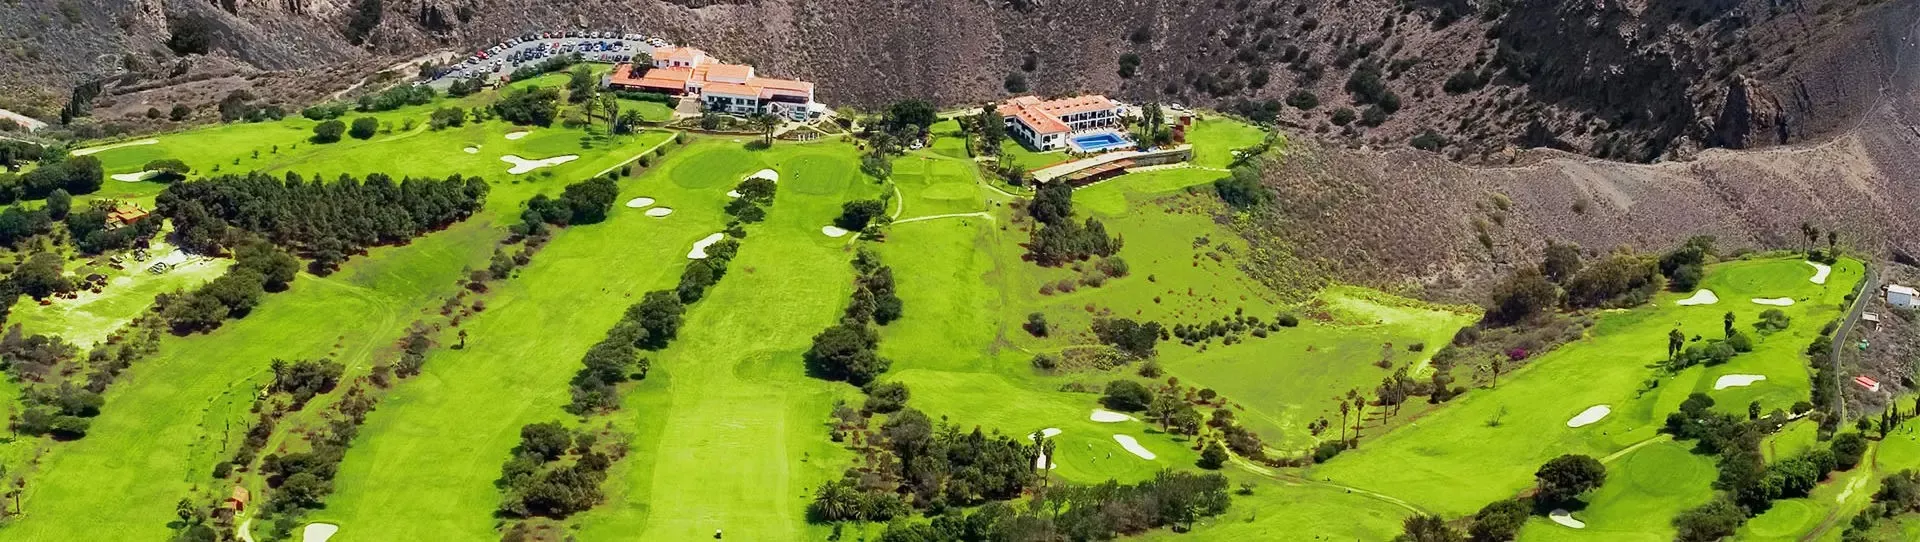 Spain golf courses - Real Club de Golf Las Palmas - Photo 3